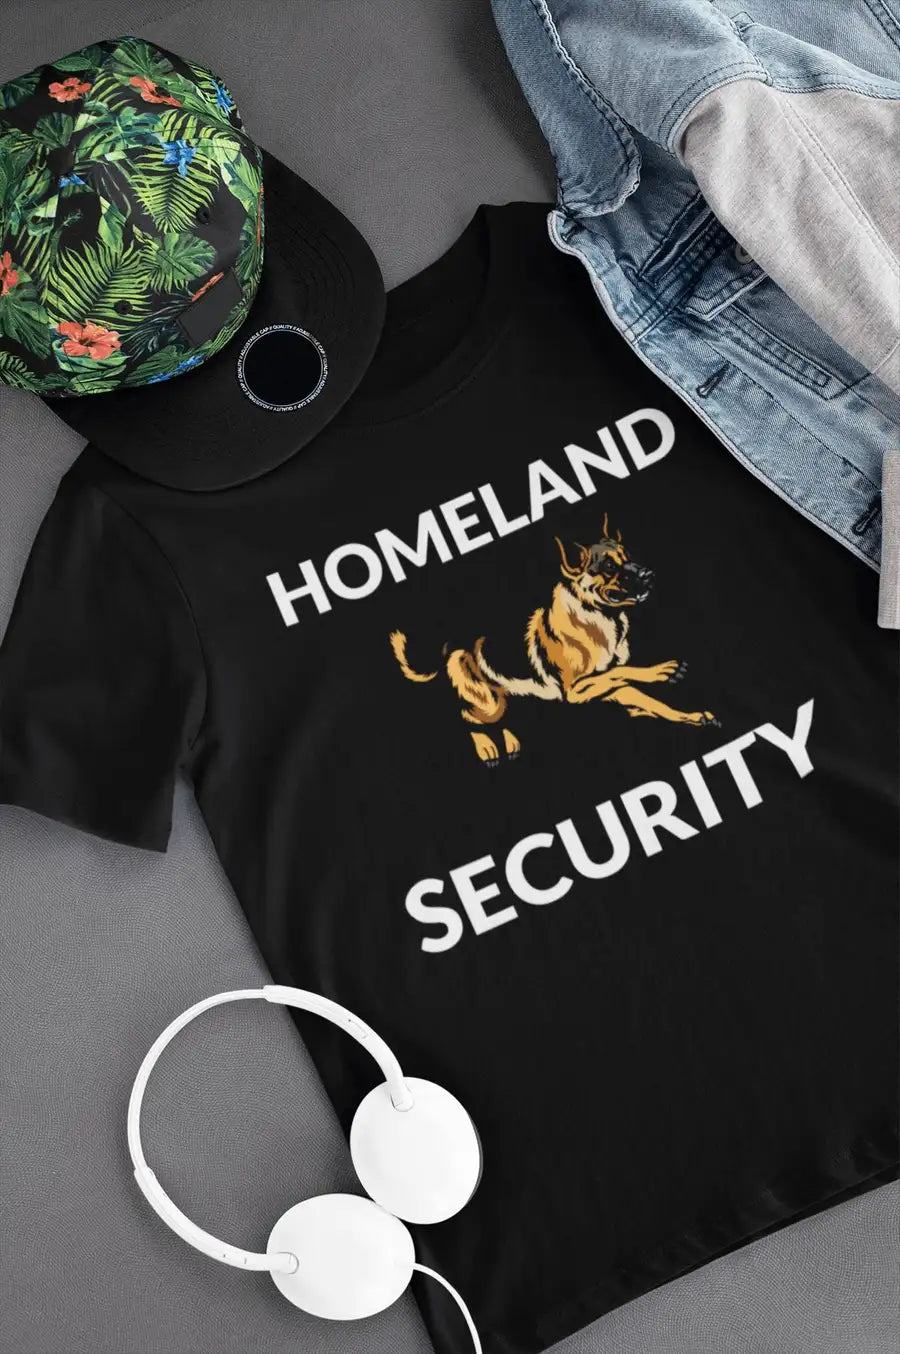 German Shepherd "Homeland Security" Black T-Shirt | Premium Design | Catch My Drift India - Catch My Drift India Clothing black, clothing, dog, german shepherd, made in india, shirt, t shirt,